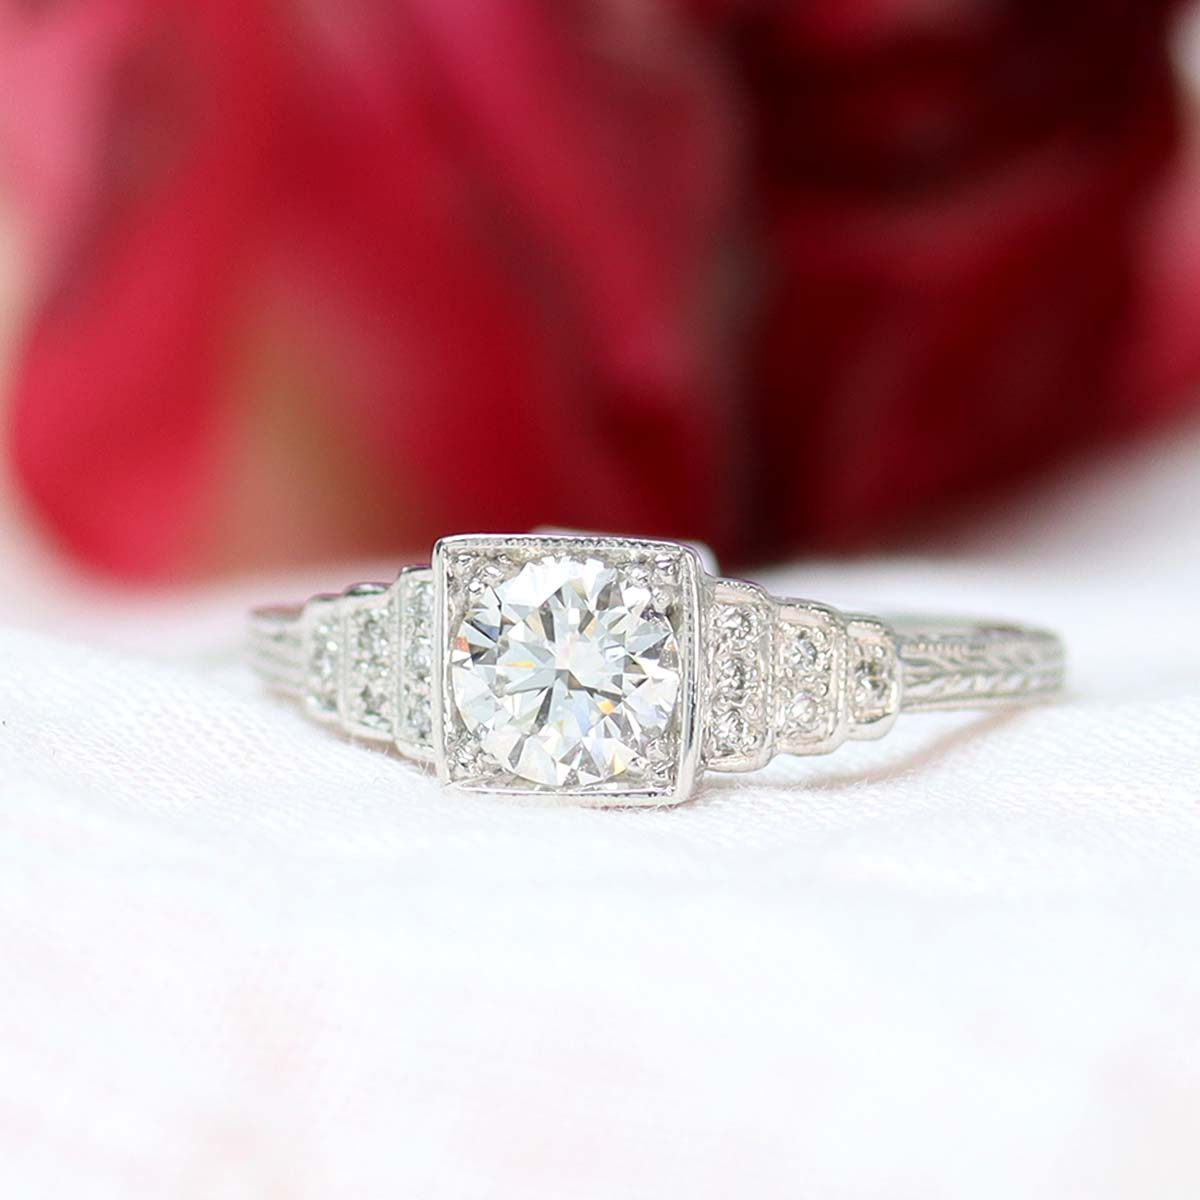 Replica Art Deco Engagement Ring #1285-15 Default Title